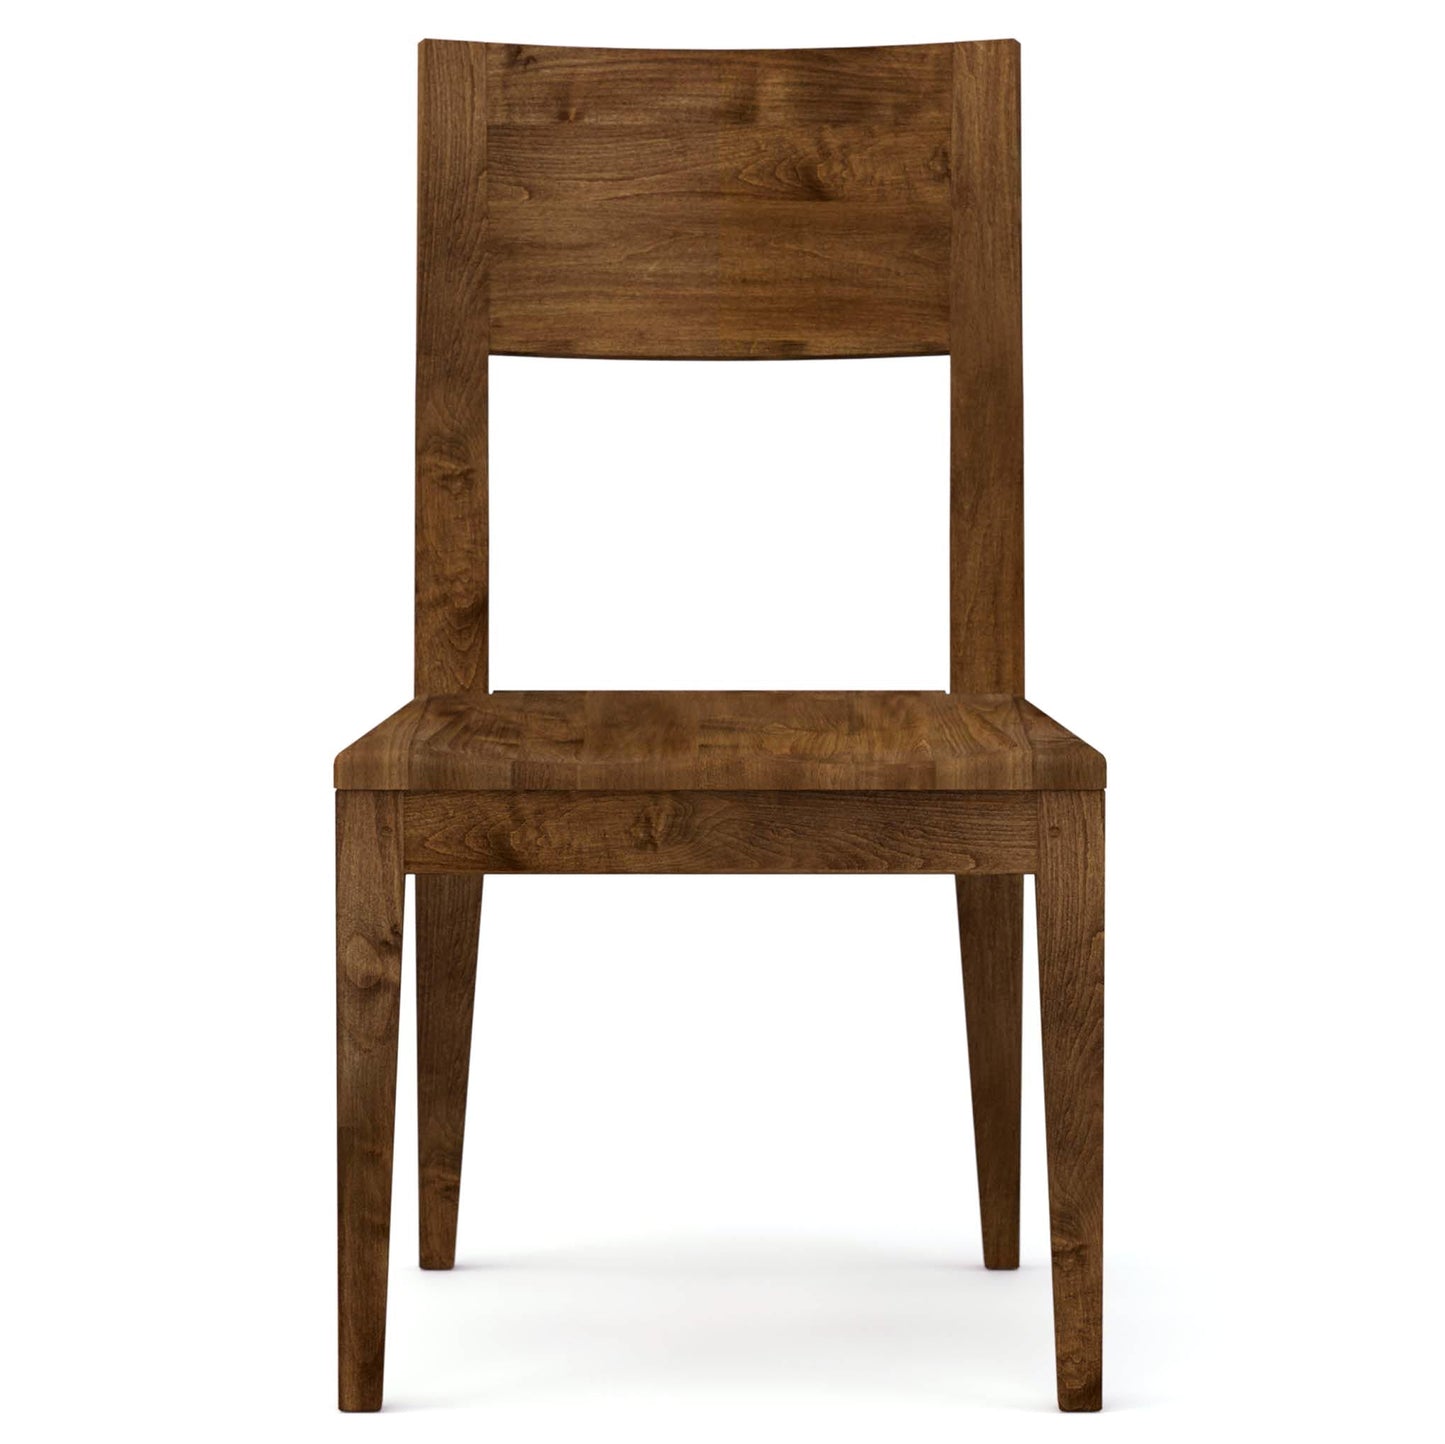 Dwyer Wooden Side Chair